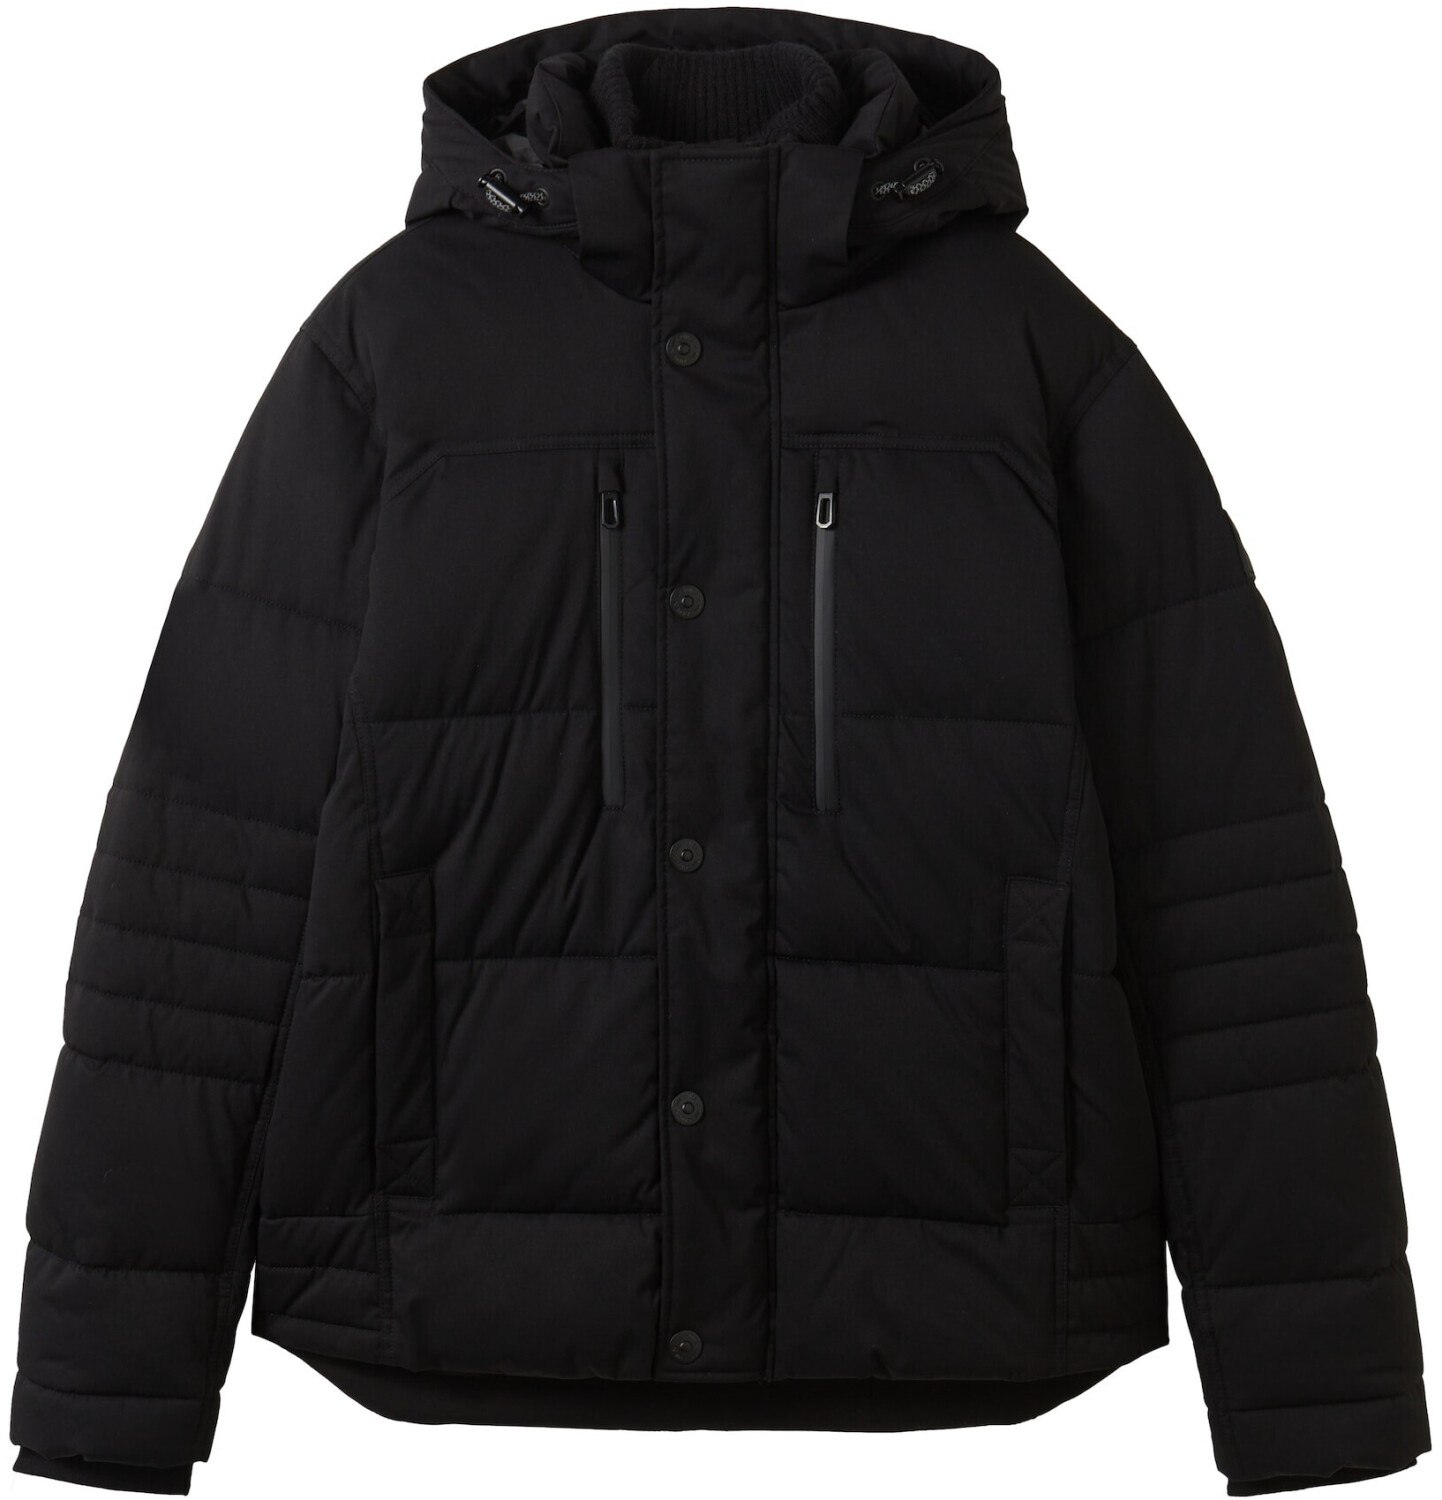 Tom Tailor Puffer jacket with a Detachable Hood (1038935) ab € 89,99 |  Preisvergleich bei